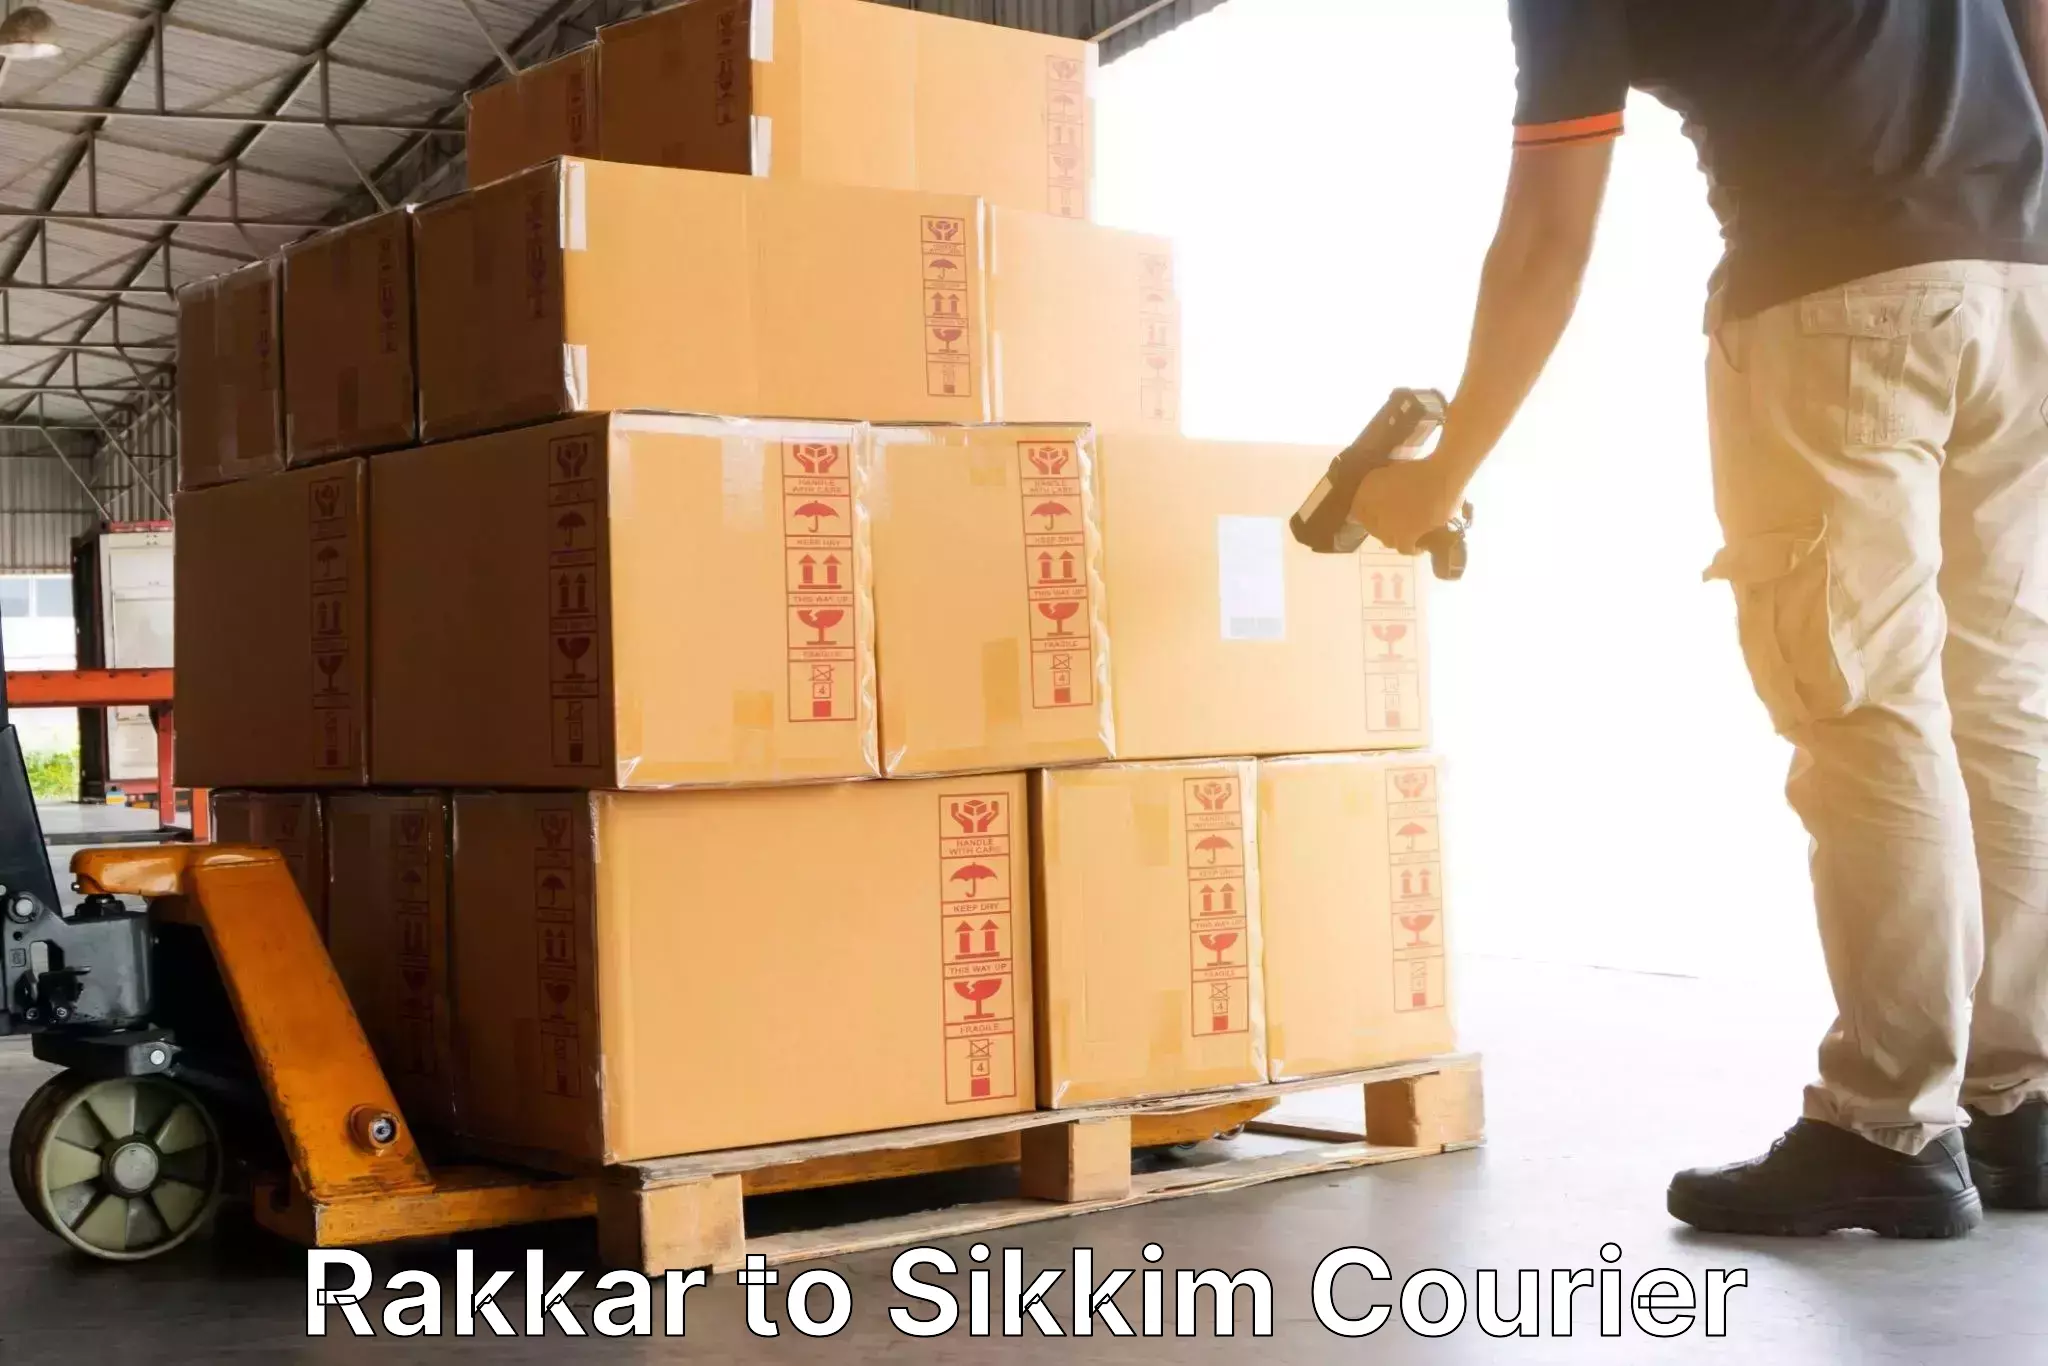 Flexible delivery schedules Rakkar to Pelling